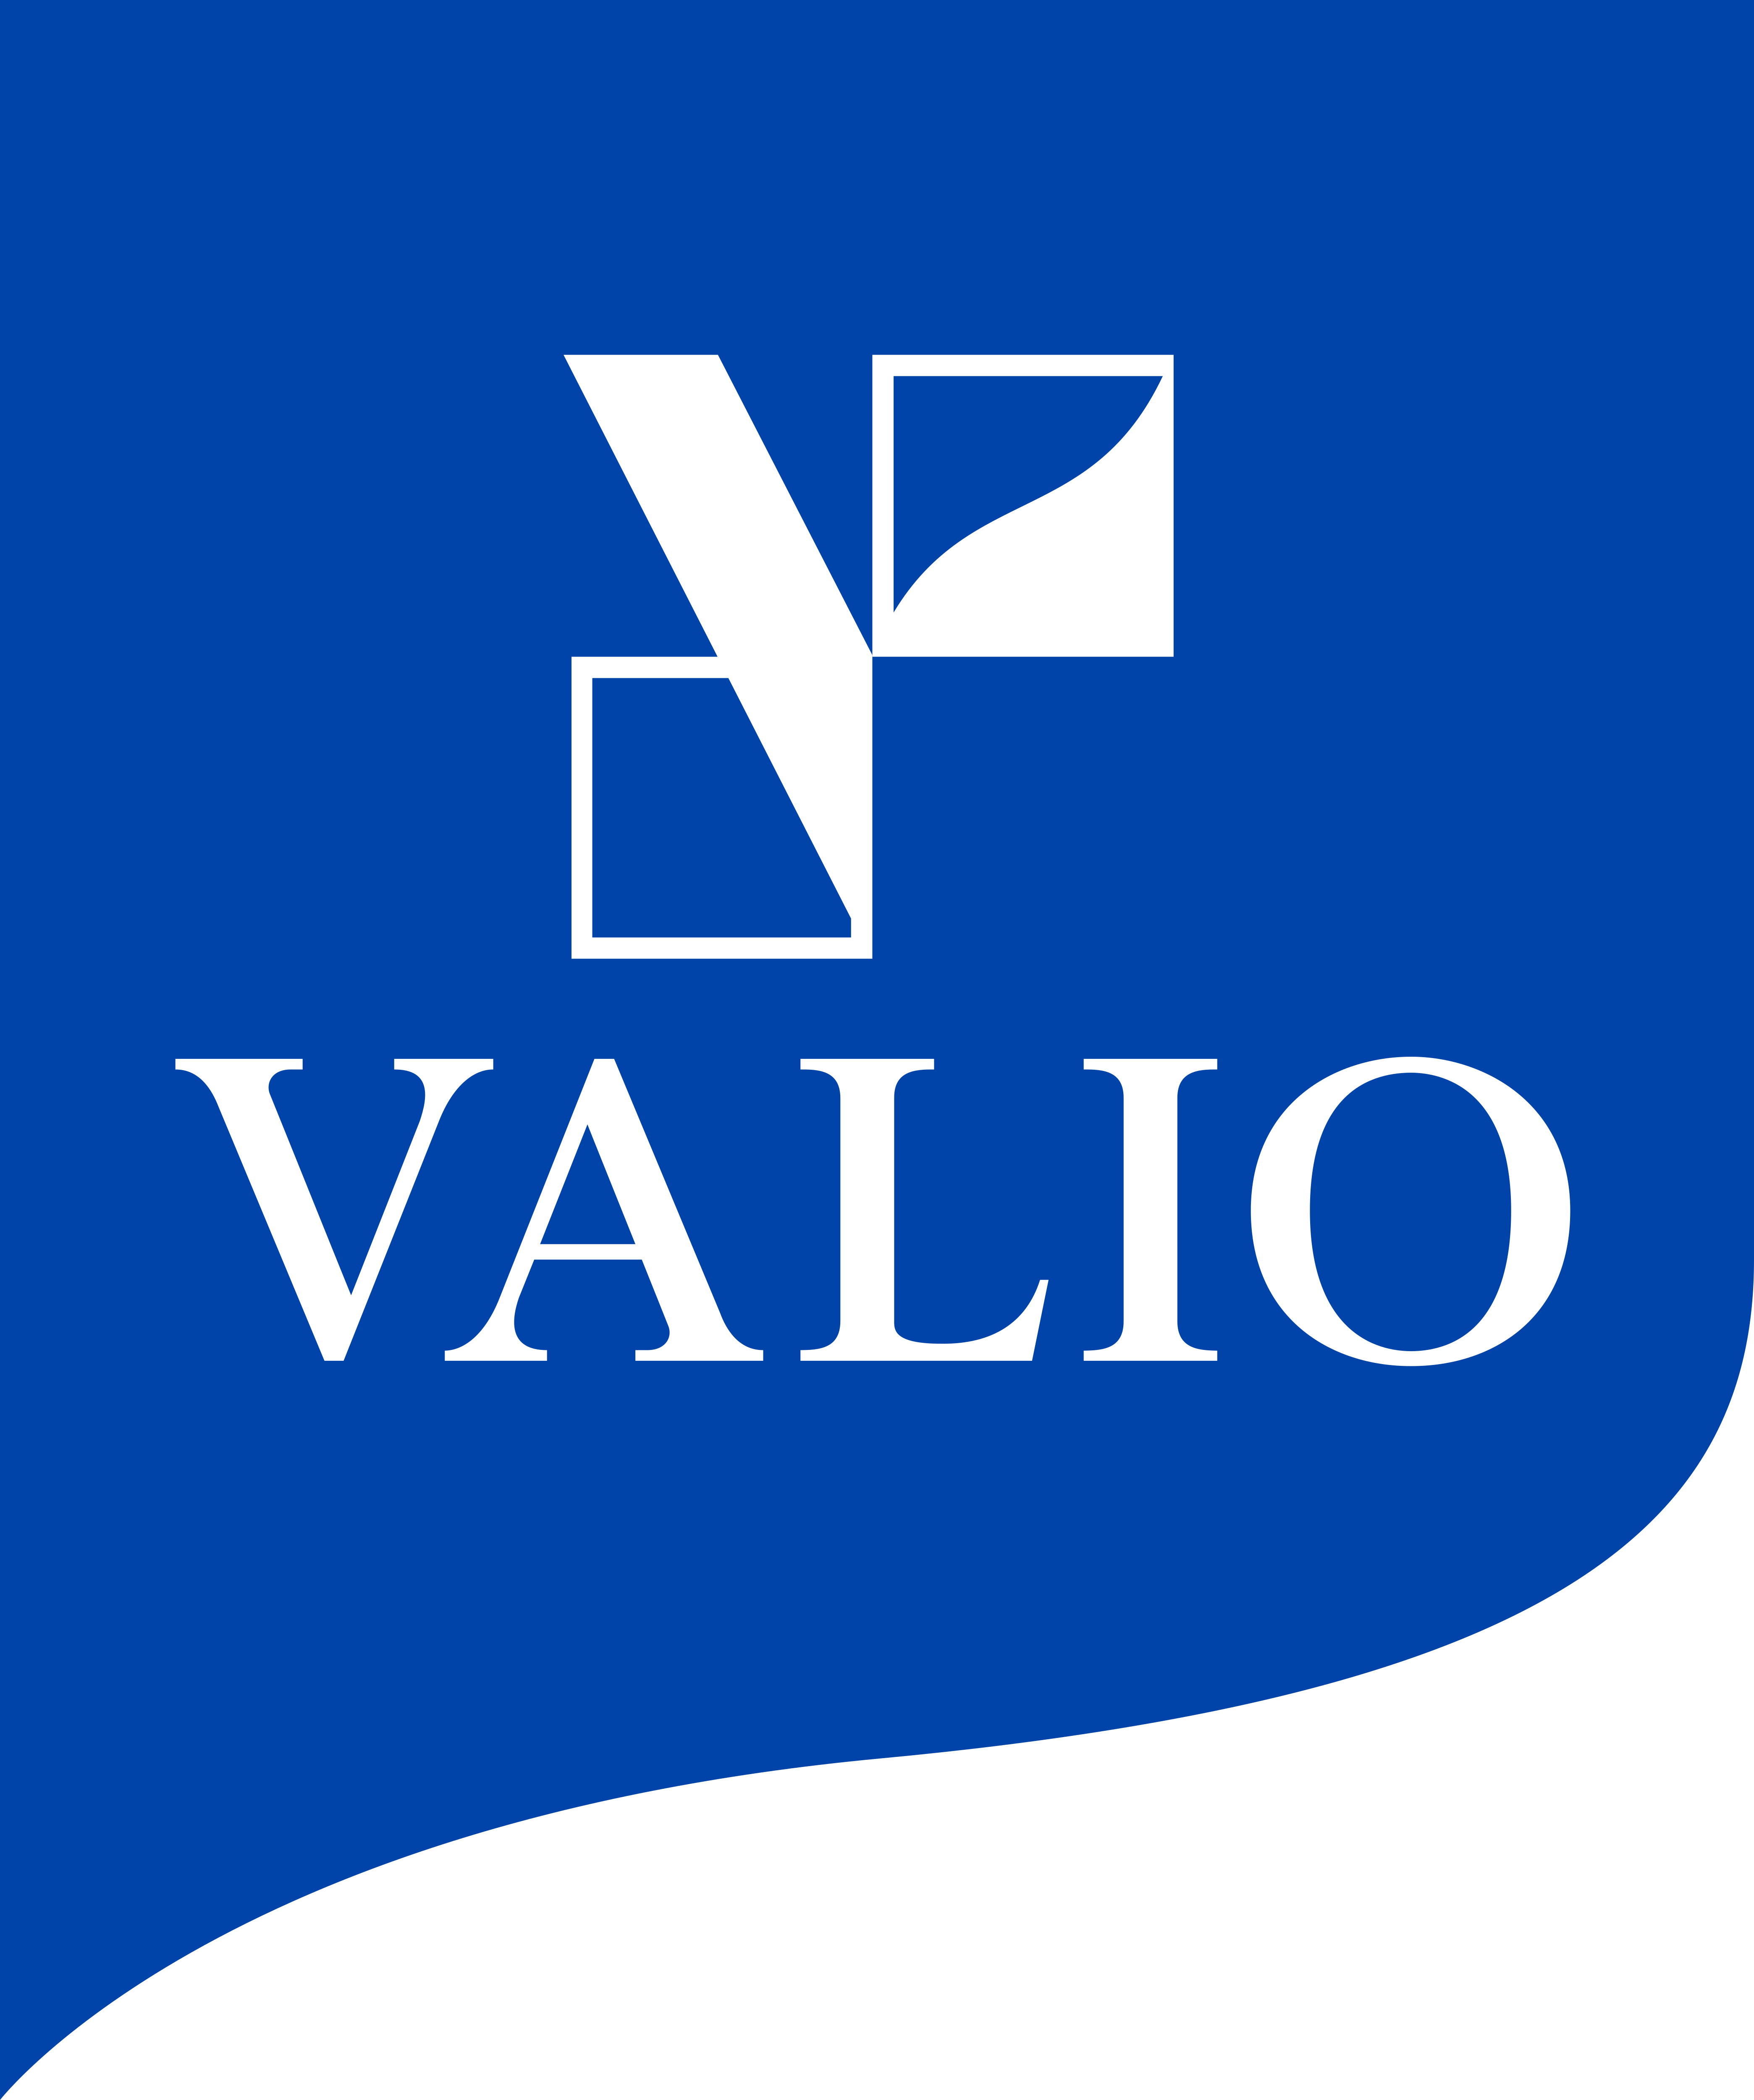 Valio - Logos Download